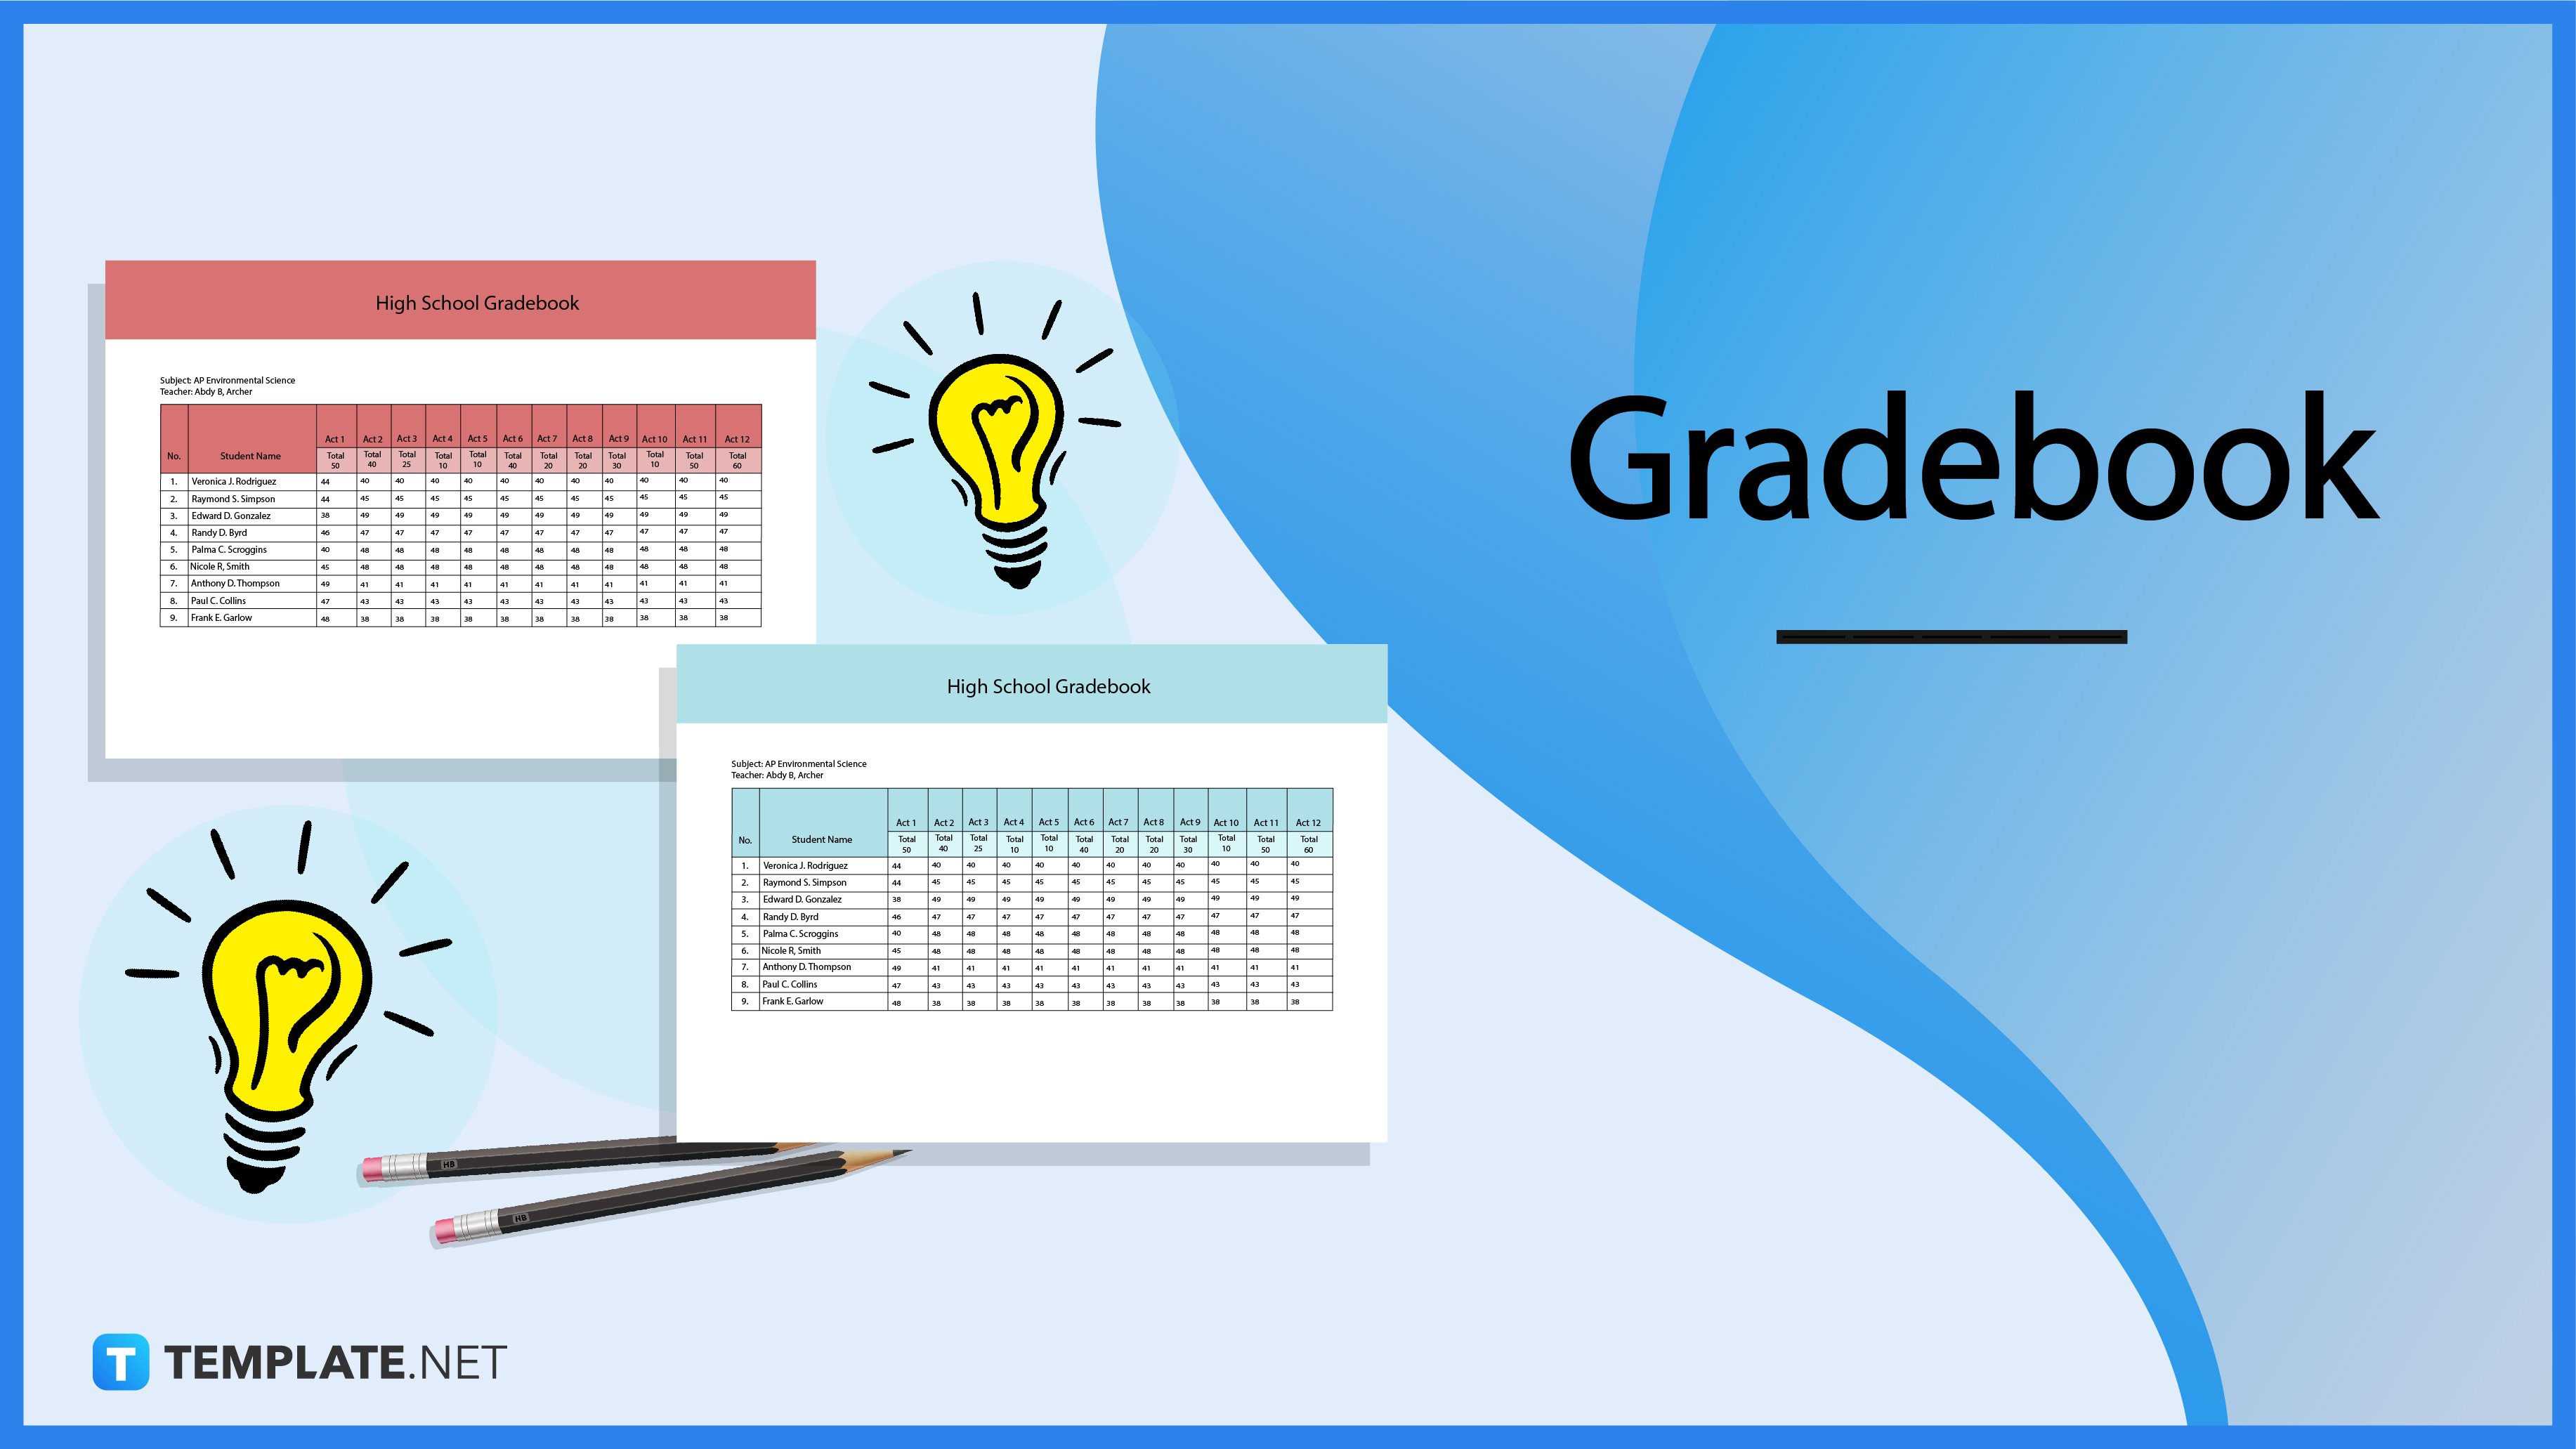 Gradebook What is a Gradebook? Definition, Types, Uses